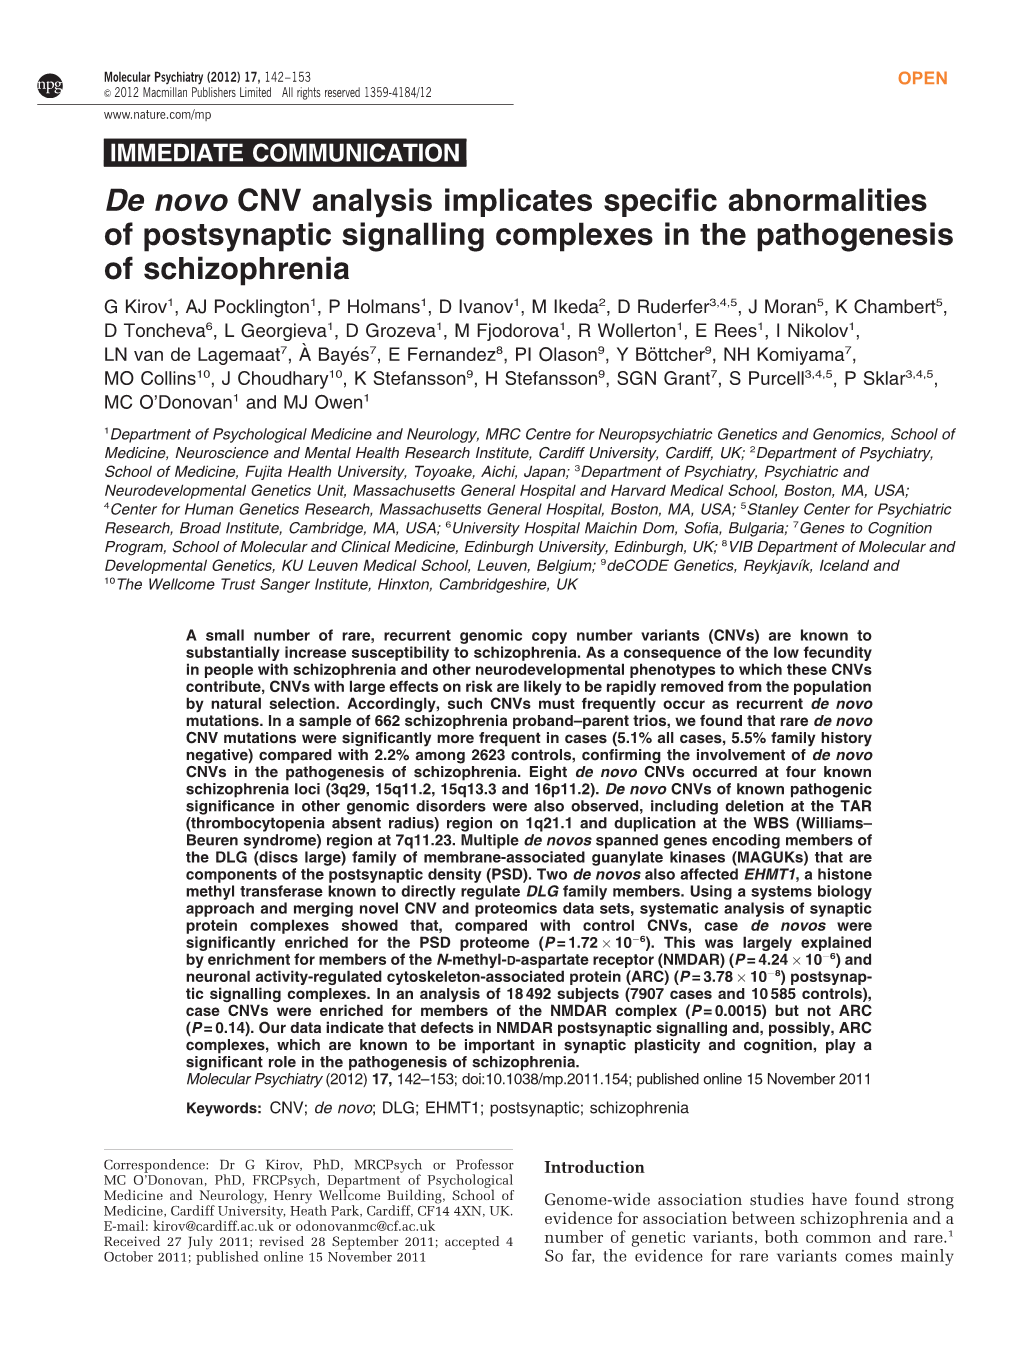 De Novo CNV Analysis Implicates Specific Abnormalities of Postsynaptic Signalling Complexes in the Pathogenesis of Schizophrenia